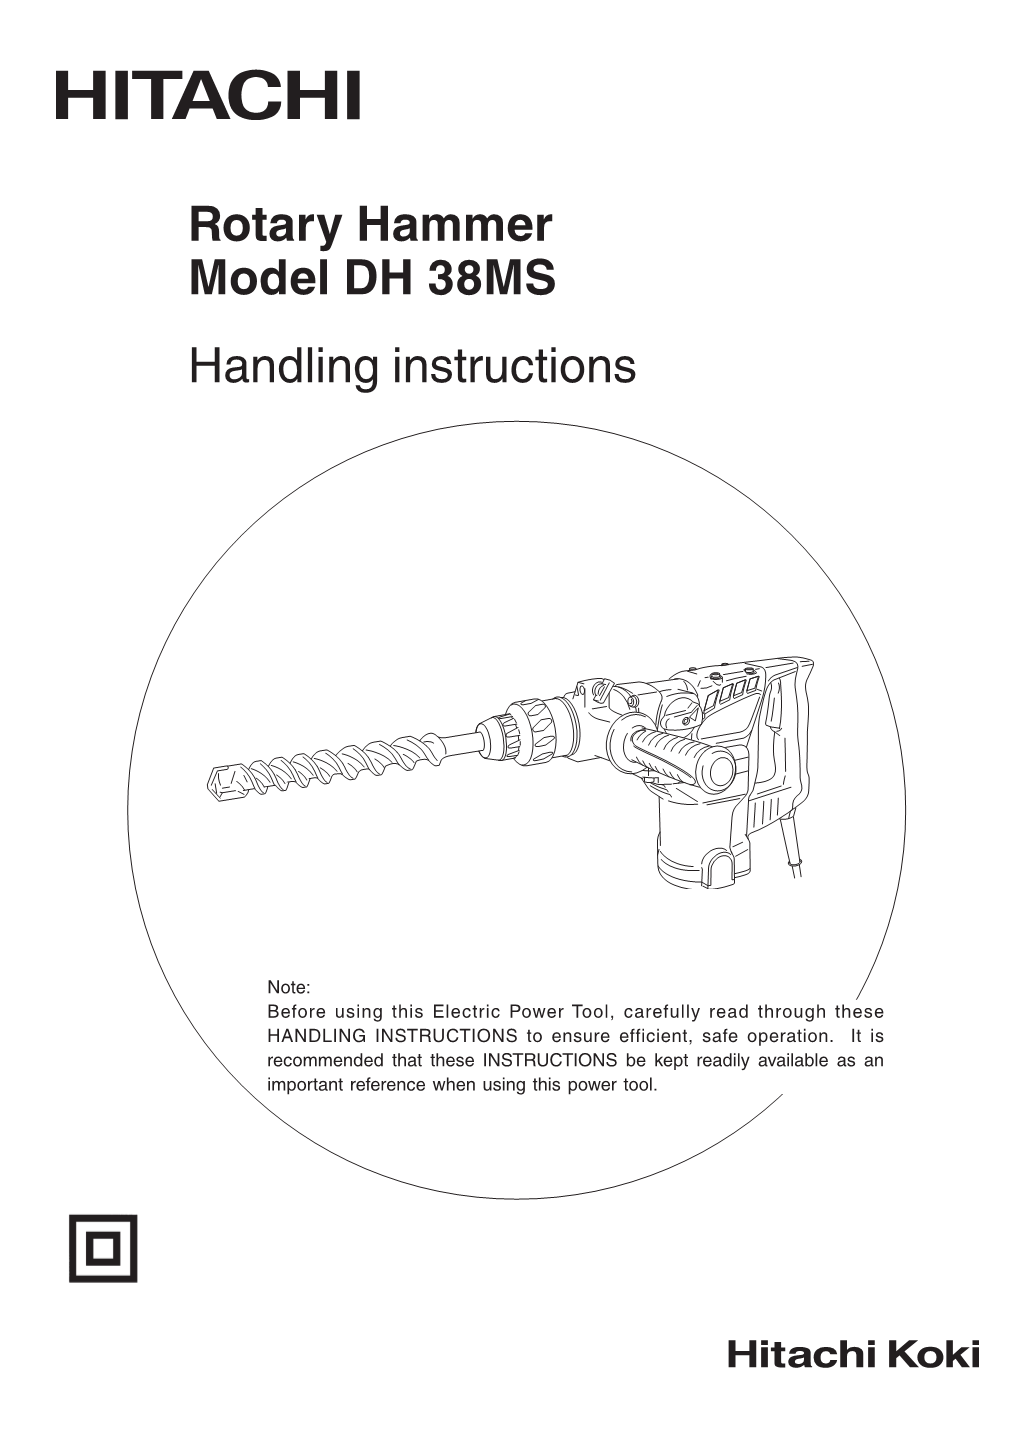 Rotary Hammer Model DH 38MS Handling Instructions